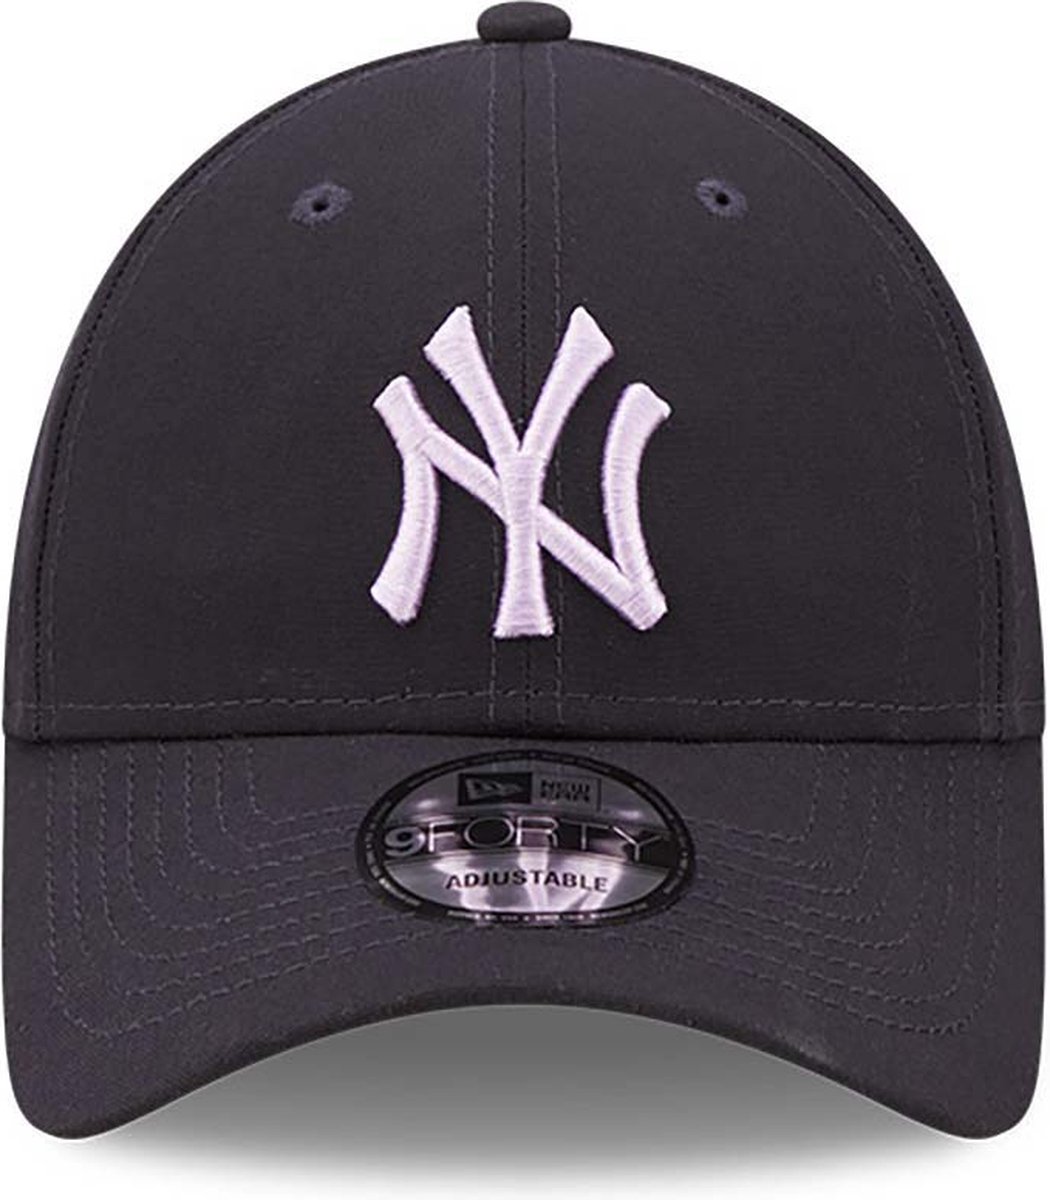 Casquettes - New Era Repreve 940 New York Yankees (noir)